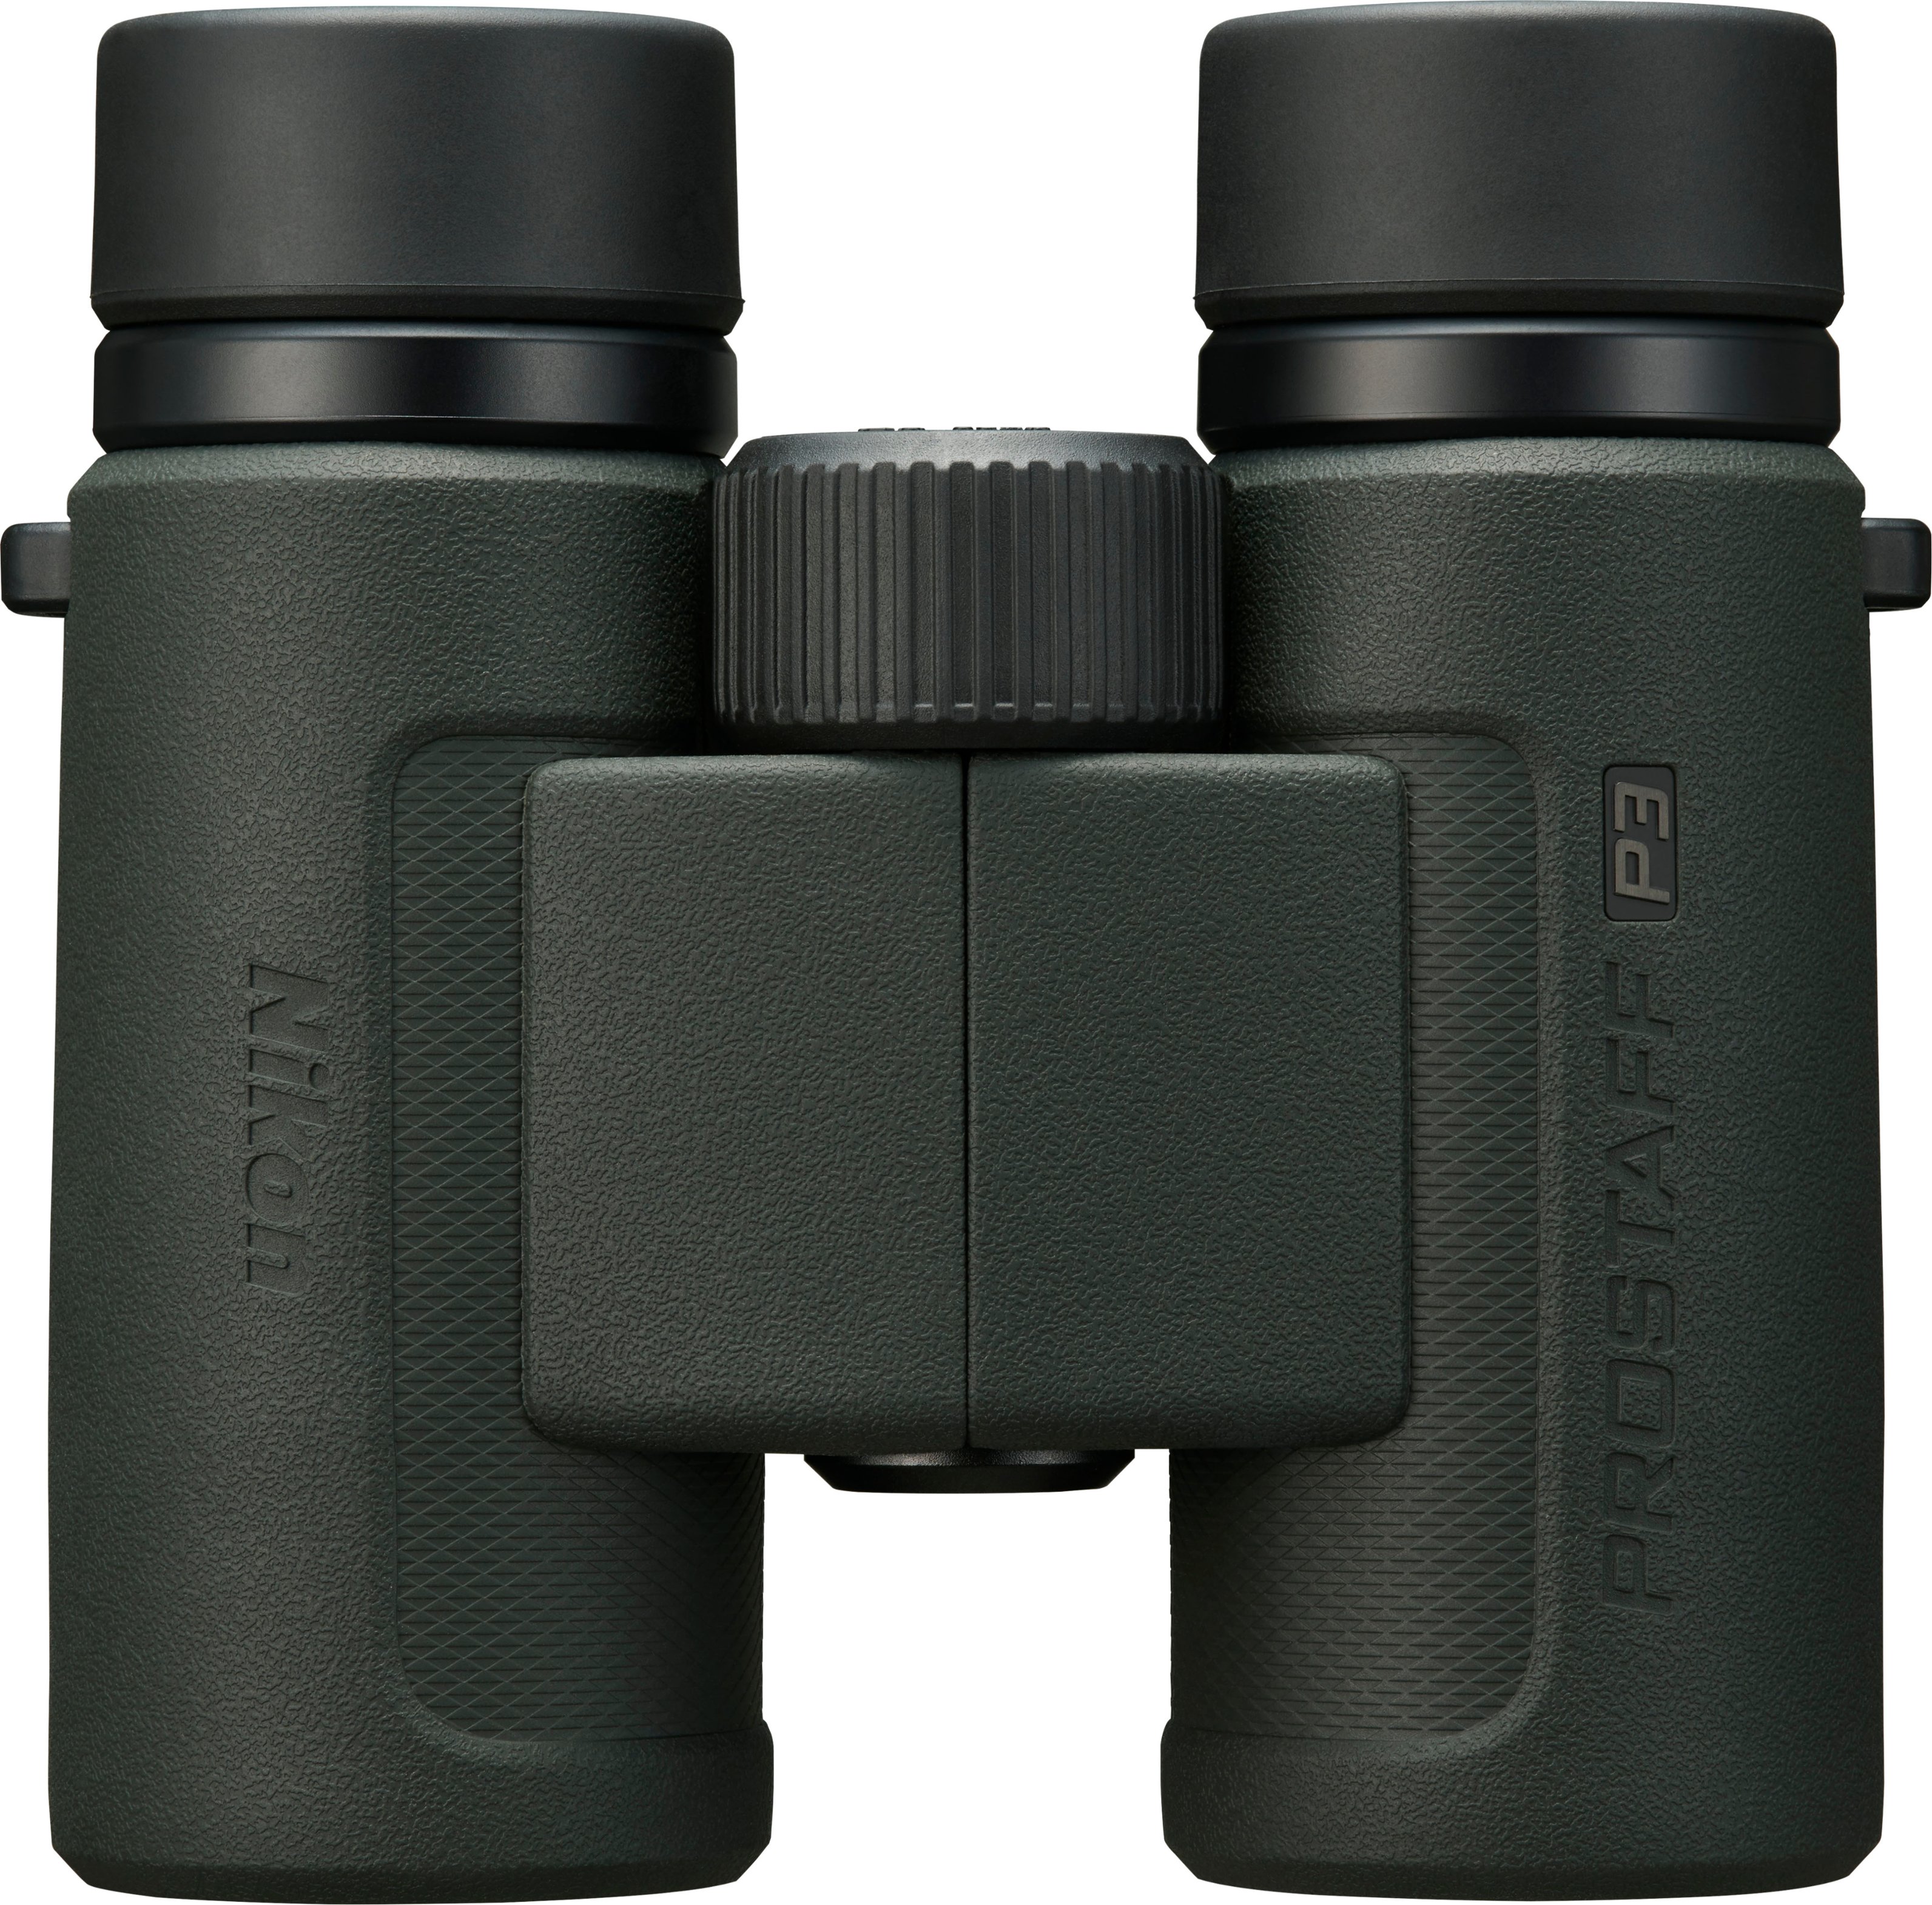 Angle View: Nikon - PROSTAFF P3 10X30 Waterproof Binoculars - Green